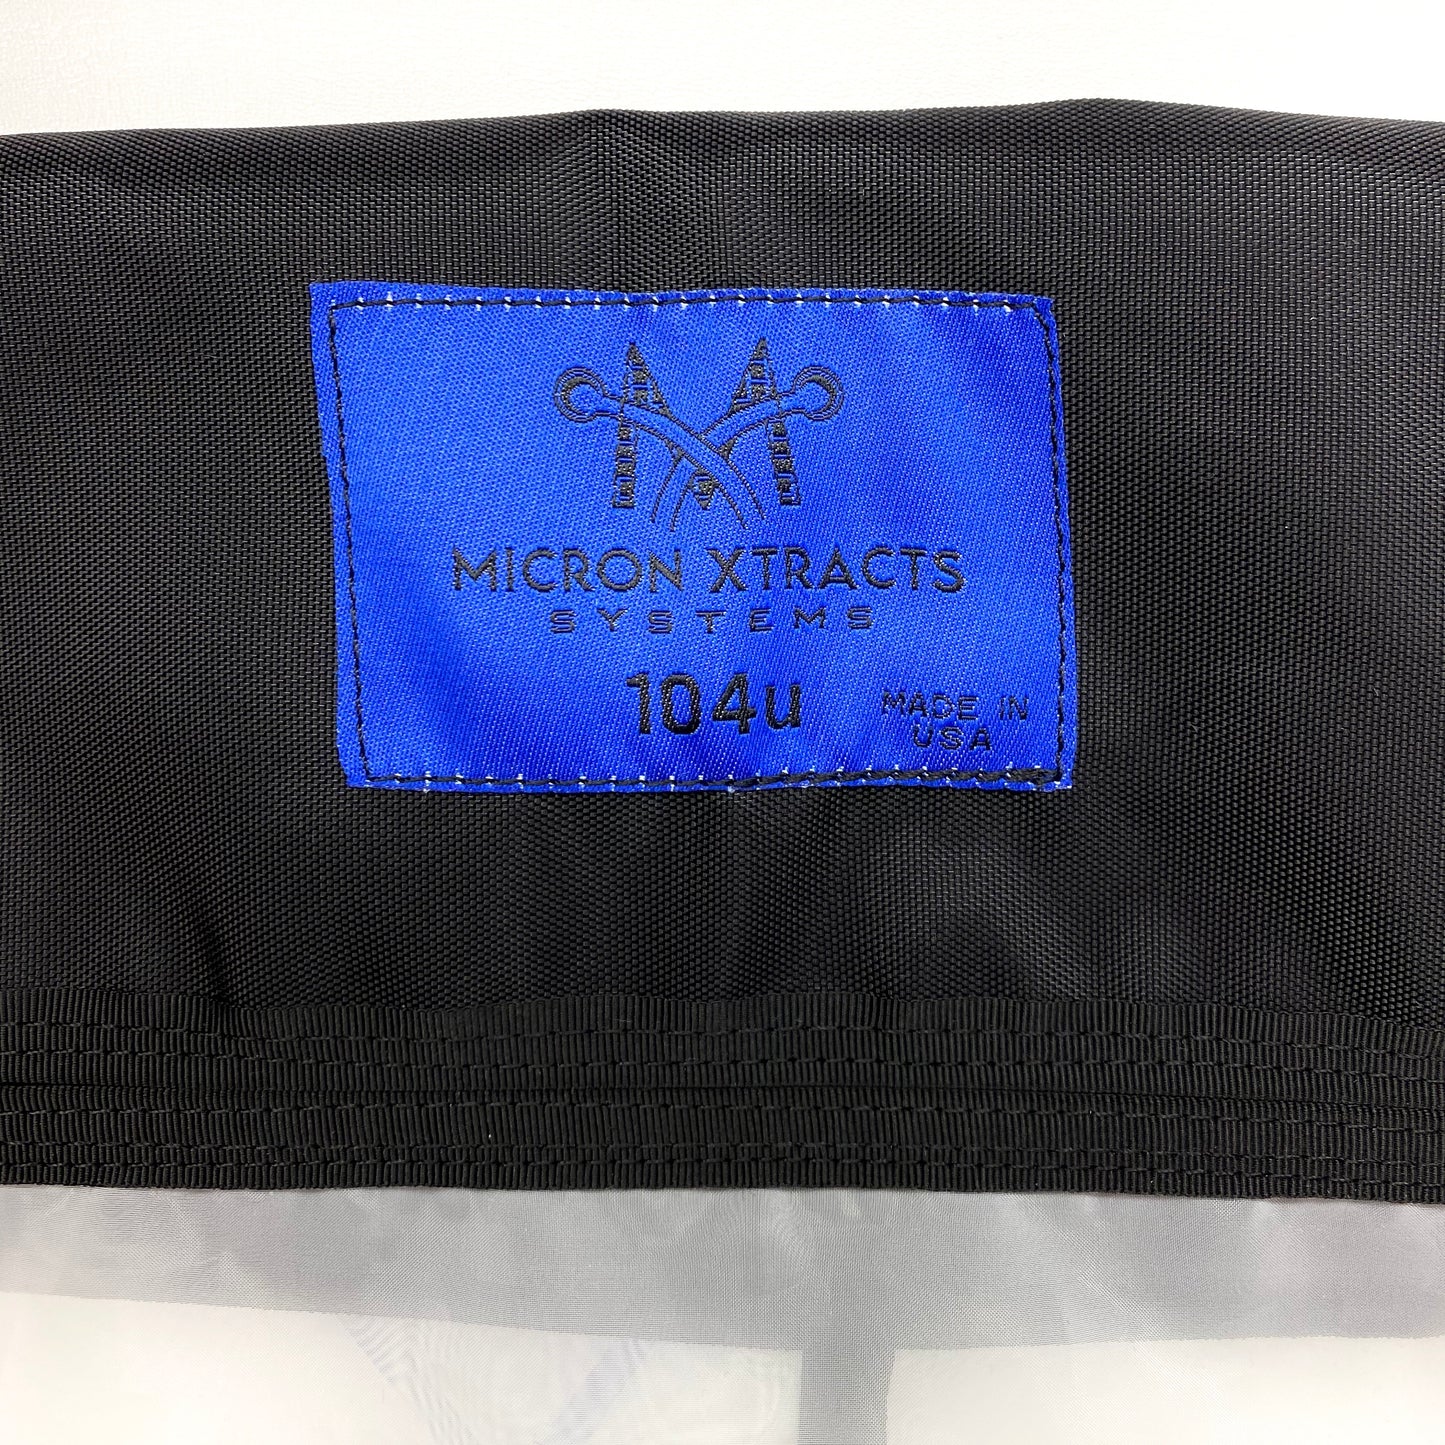 MicronXtracts Full Mesh 5 gallon 104 micron Bag